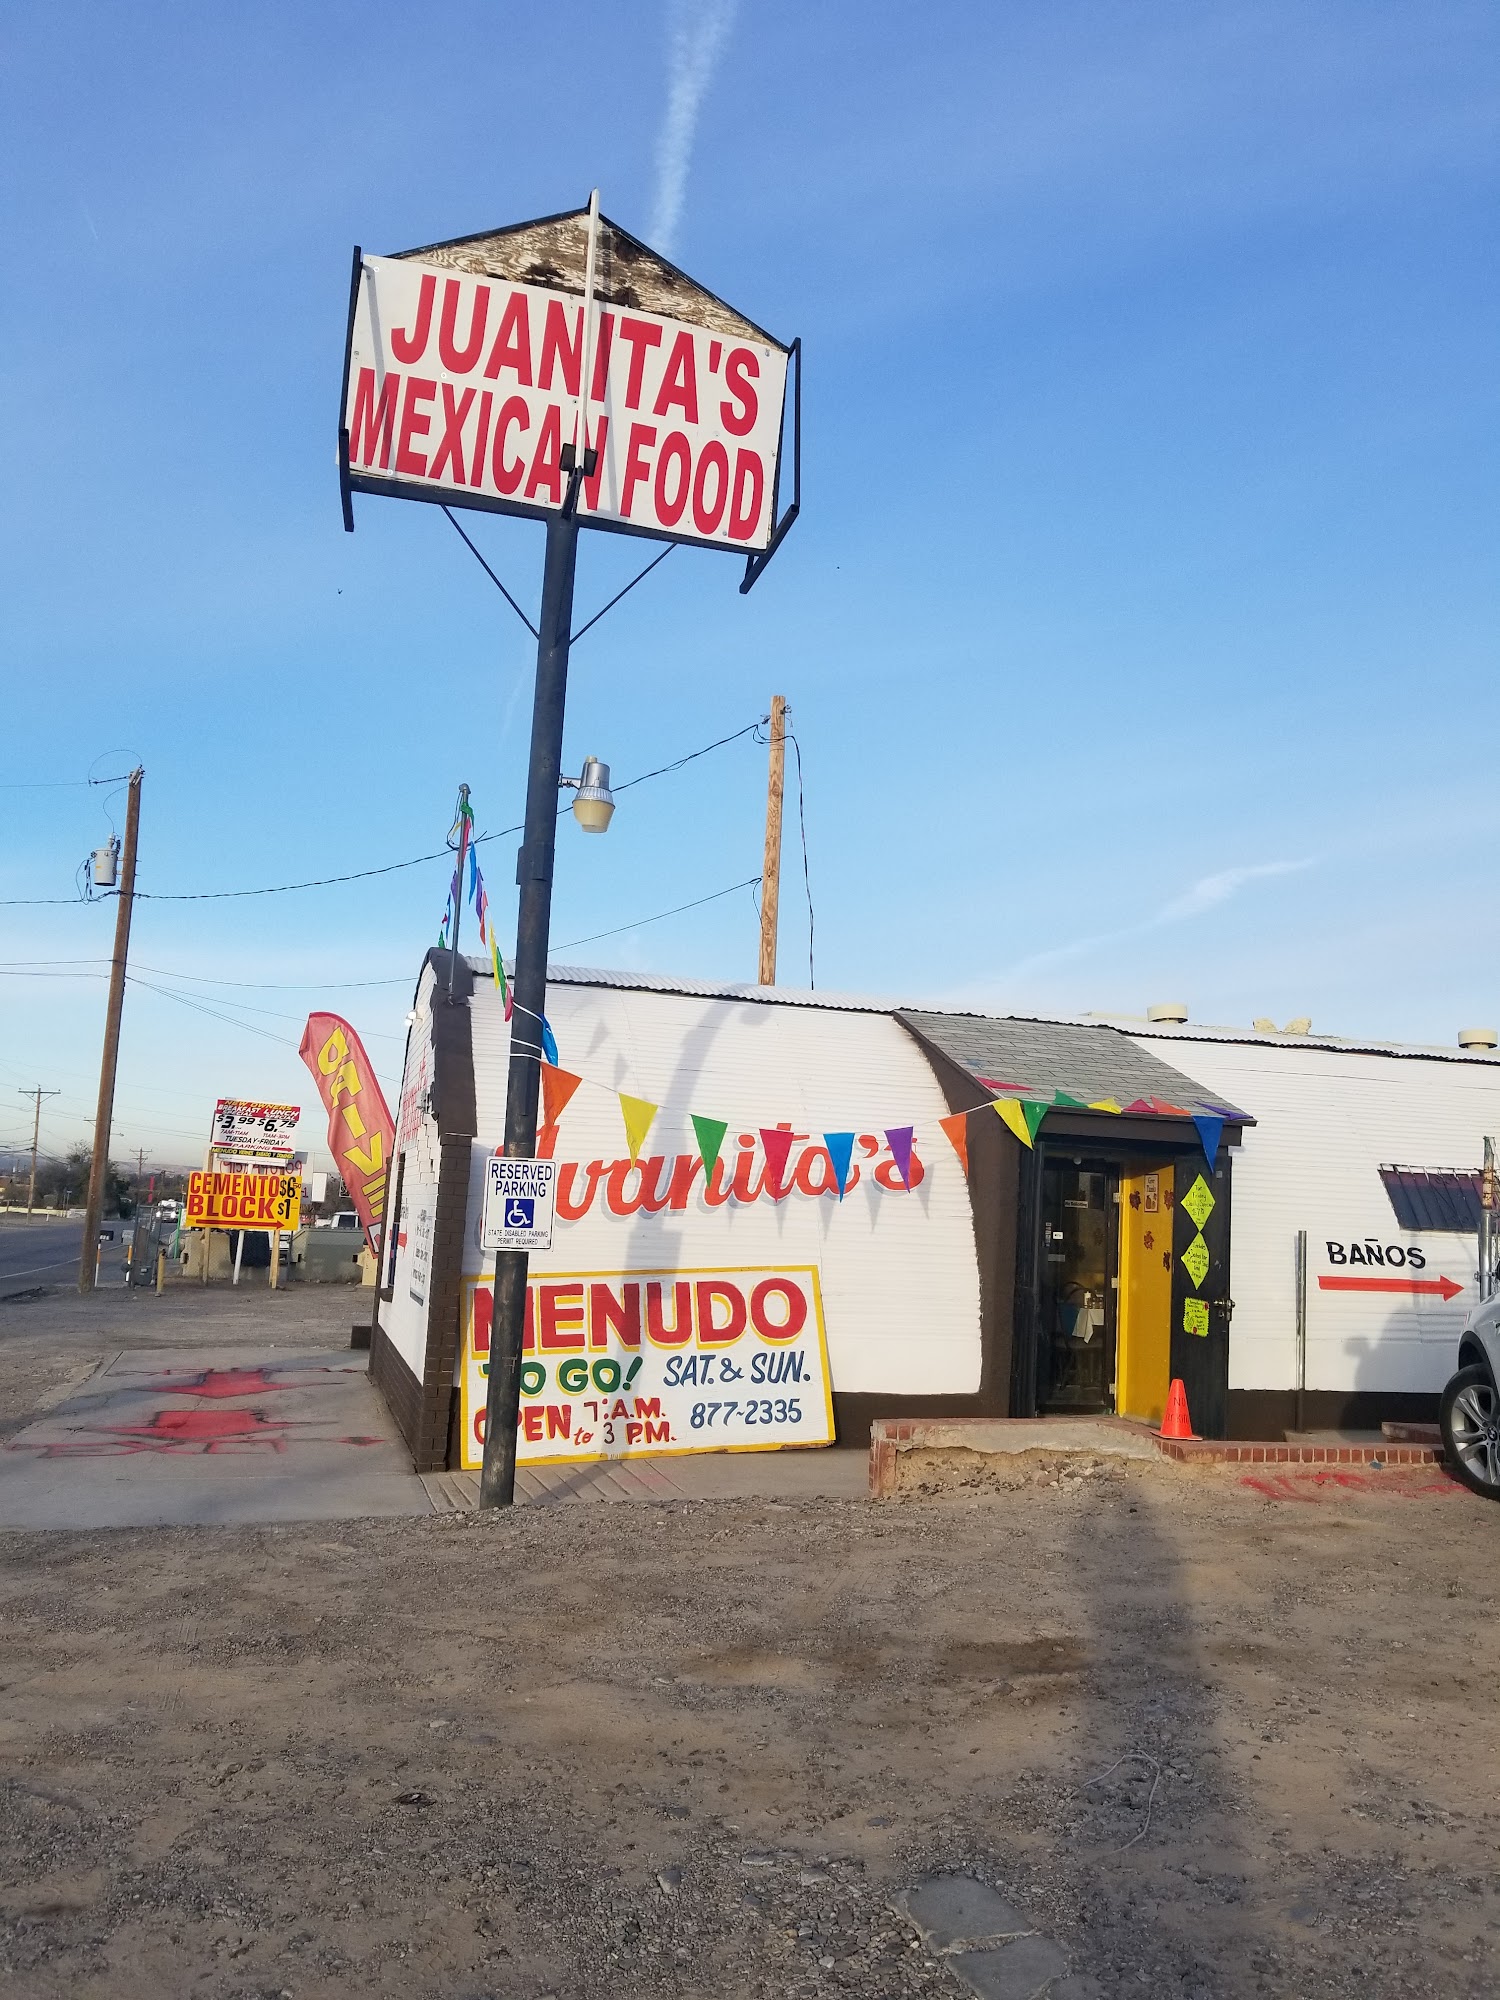 Juanita's Mexican Food